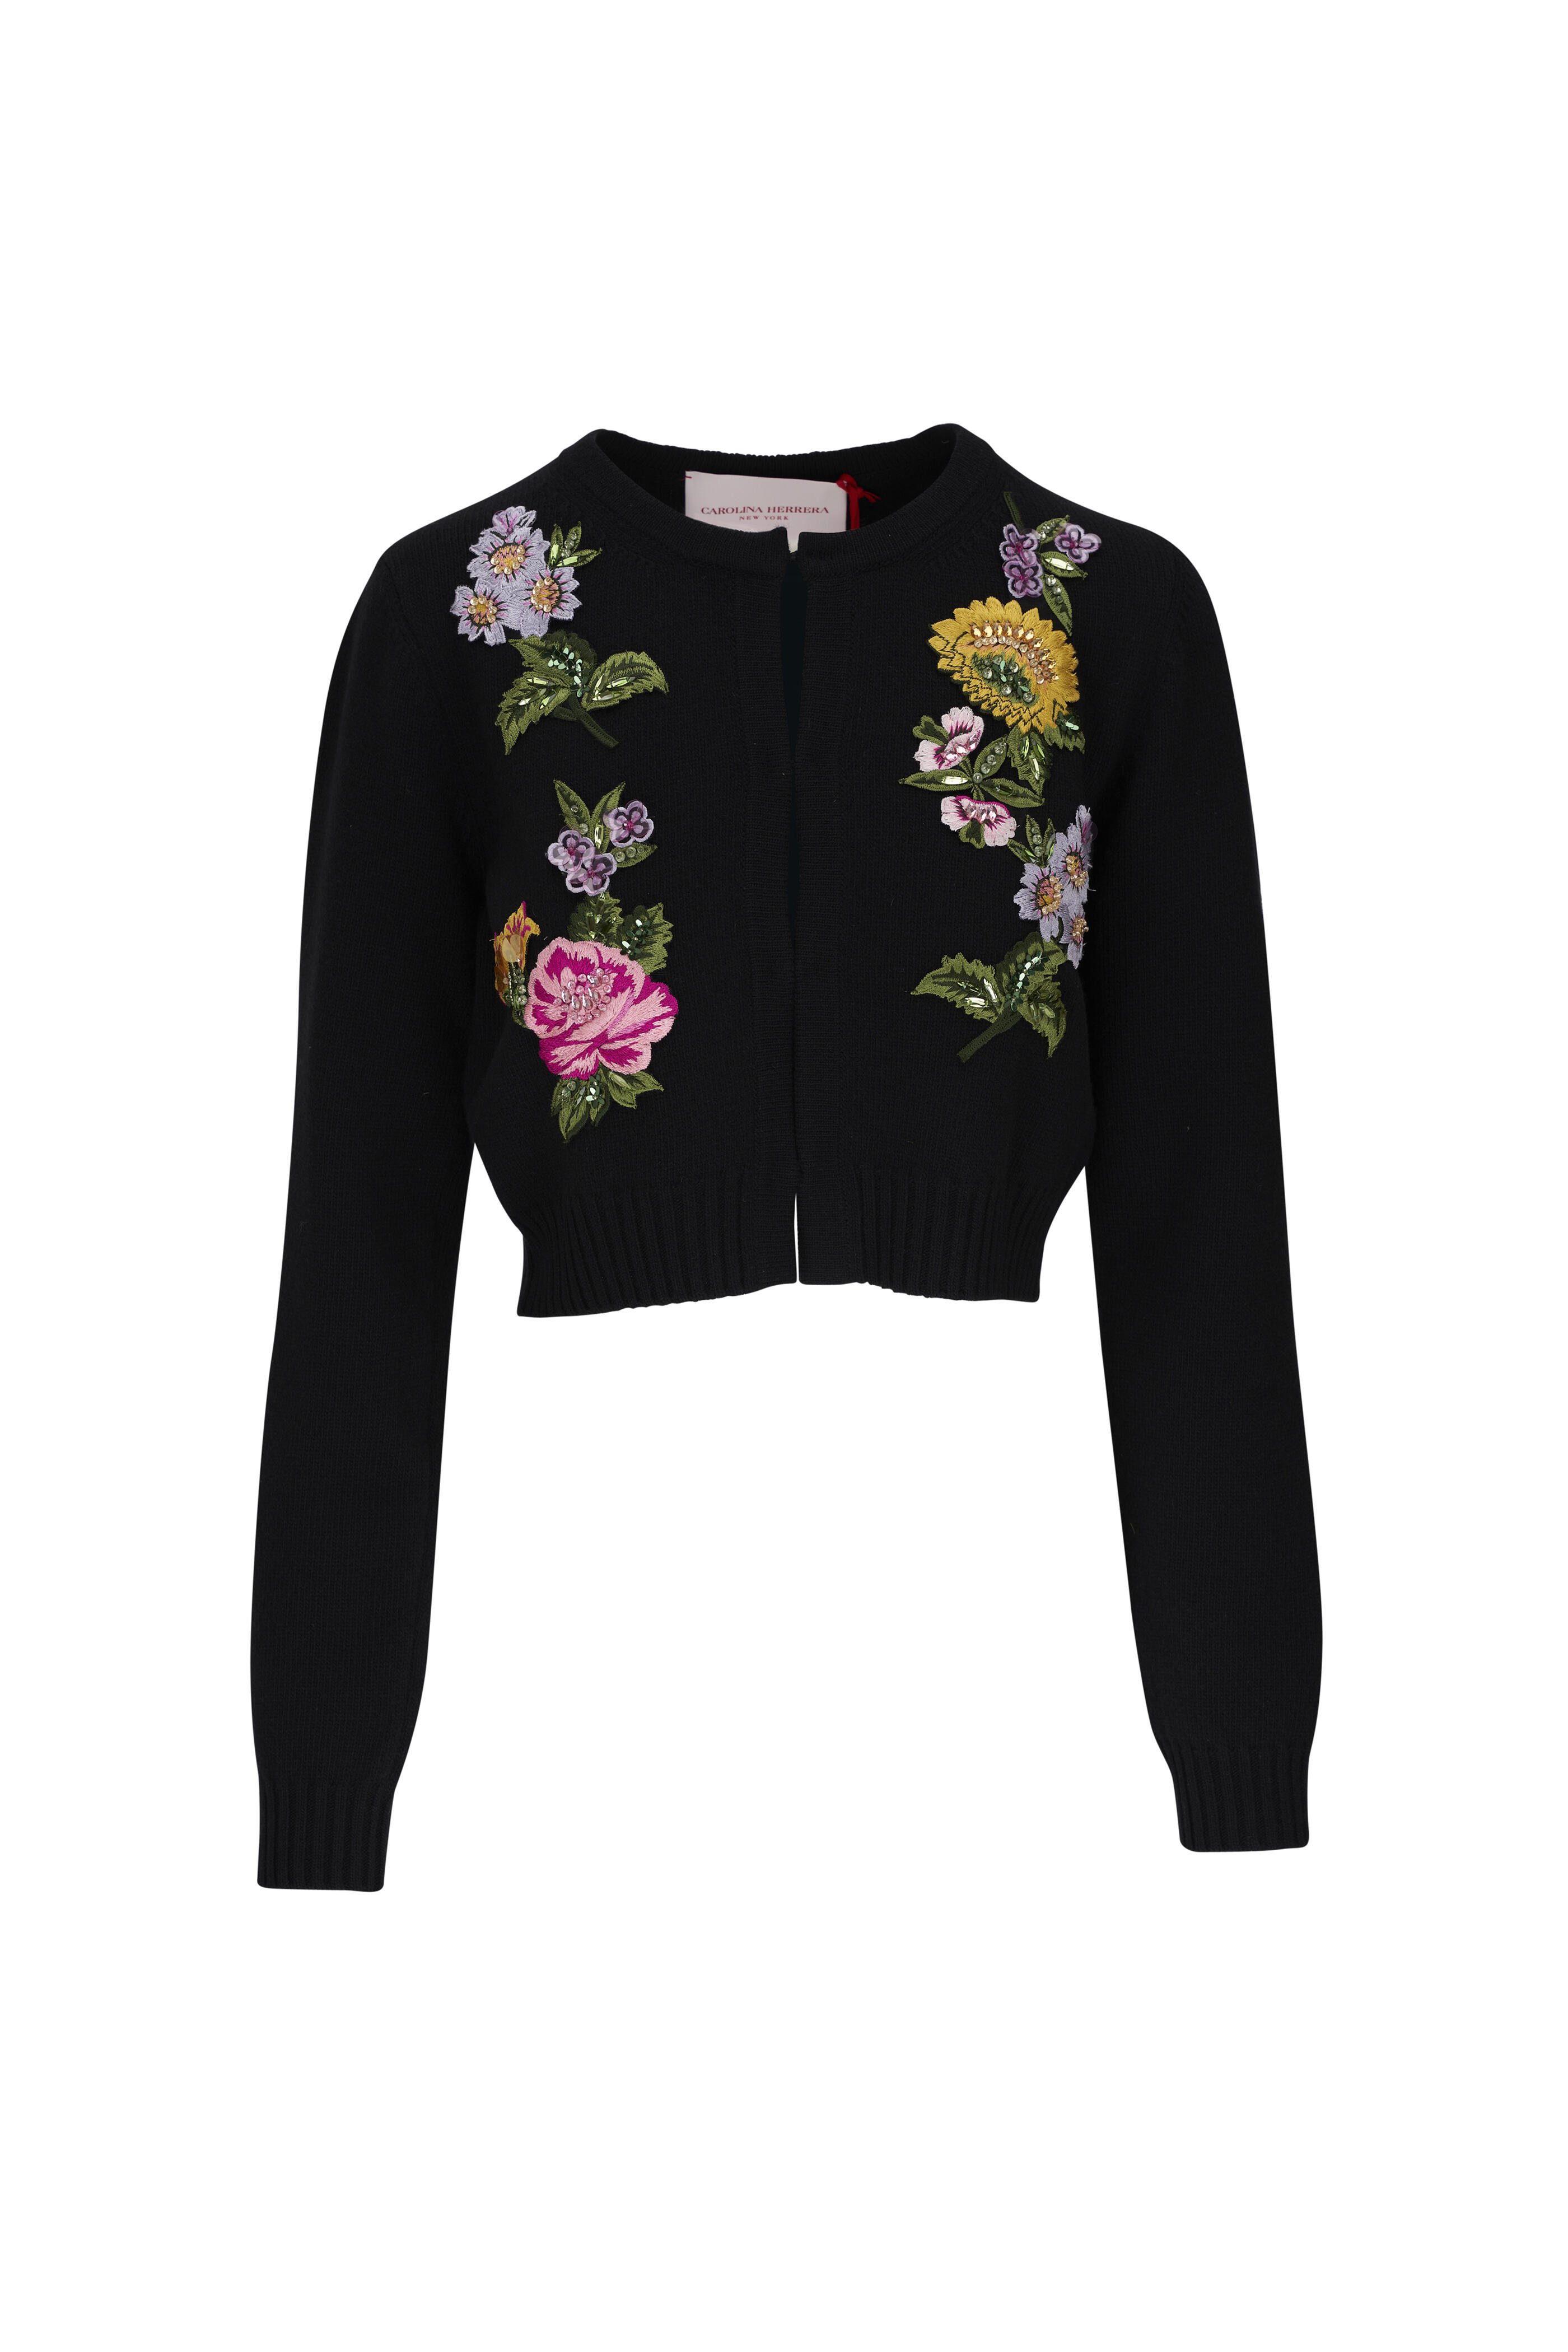 Carolina Herrera - Black Multi Floral Embroidered Cardigan